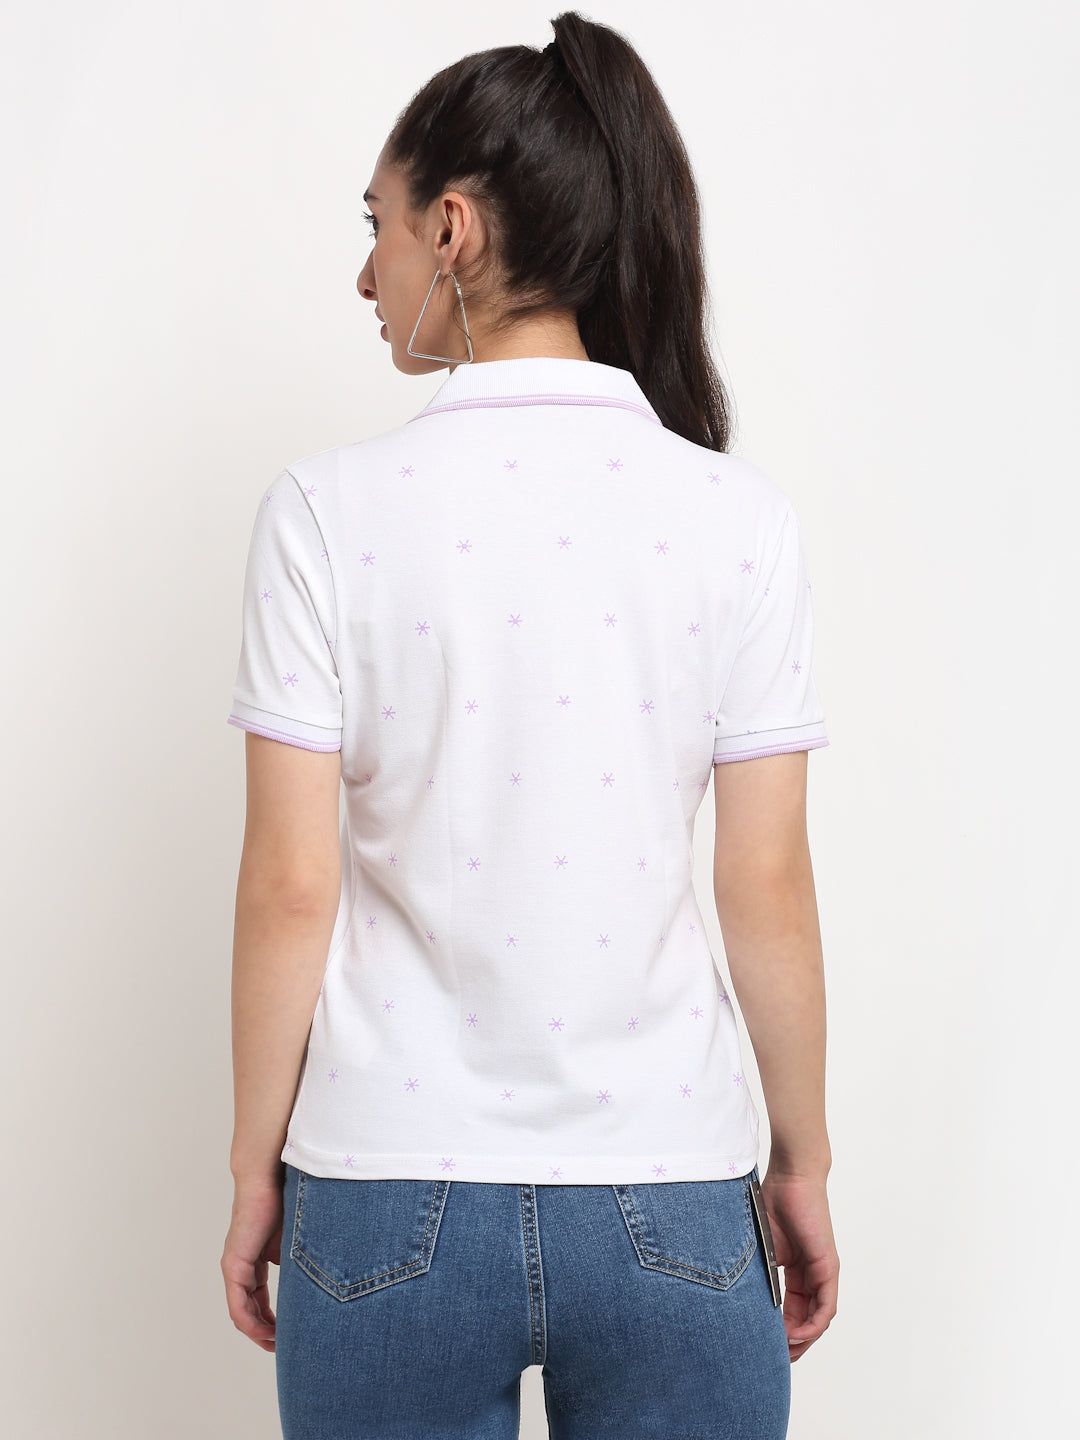 Women Straight-Fit Polo Neck White T-Shirt